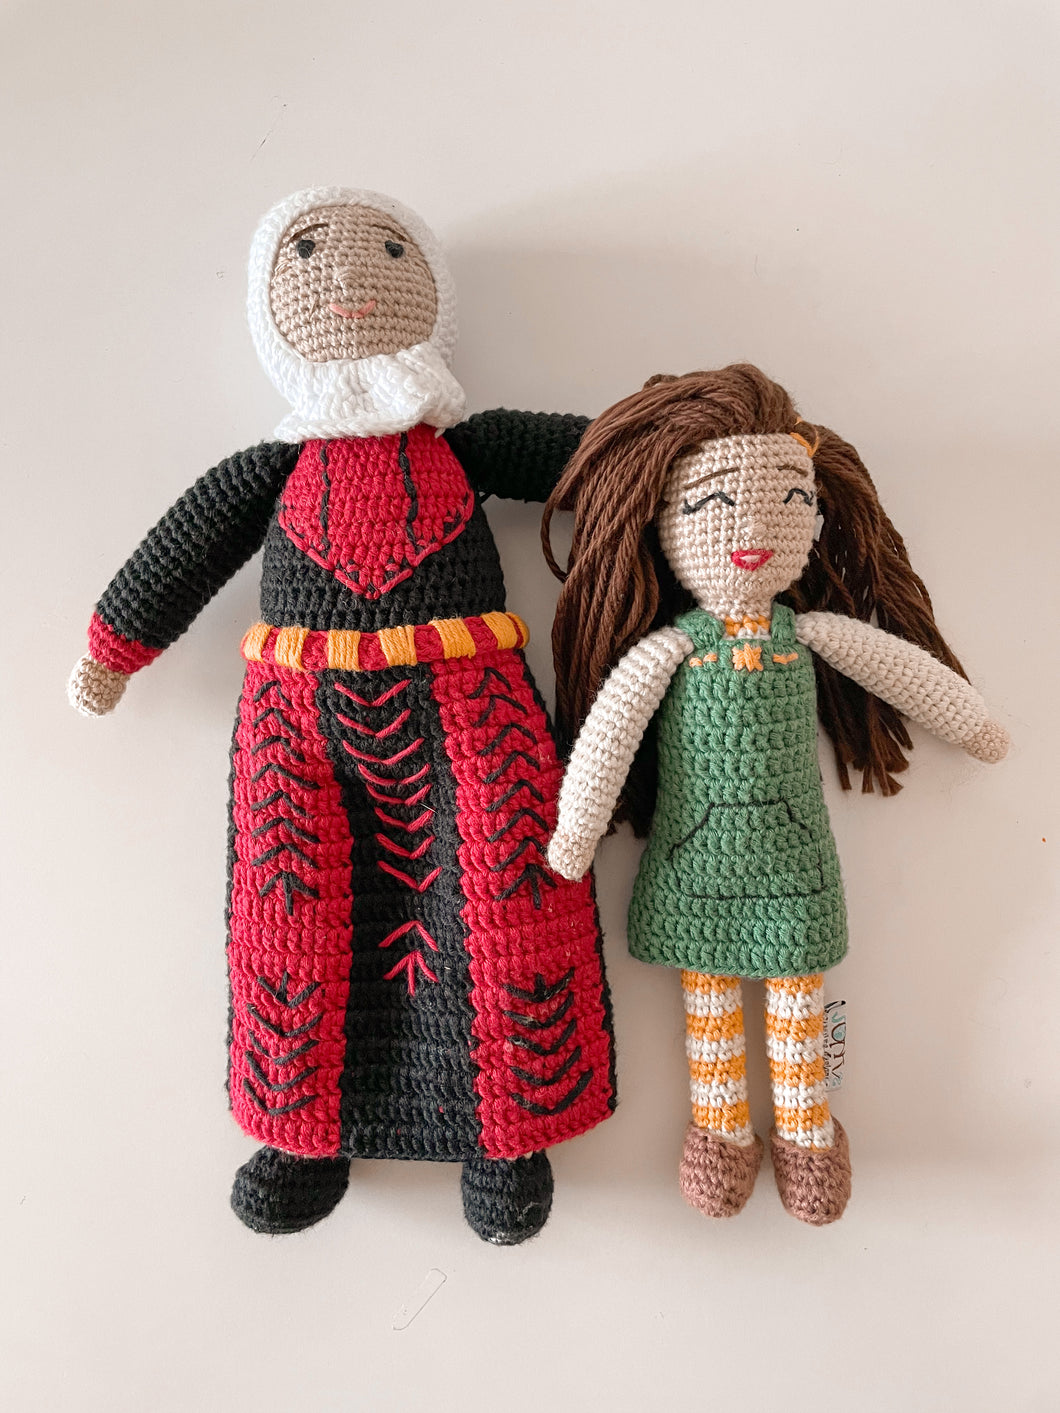 Palestine Crochet Dolls | Sitti's Olive Trees